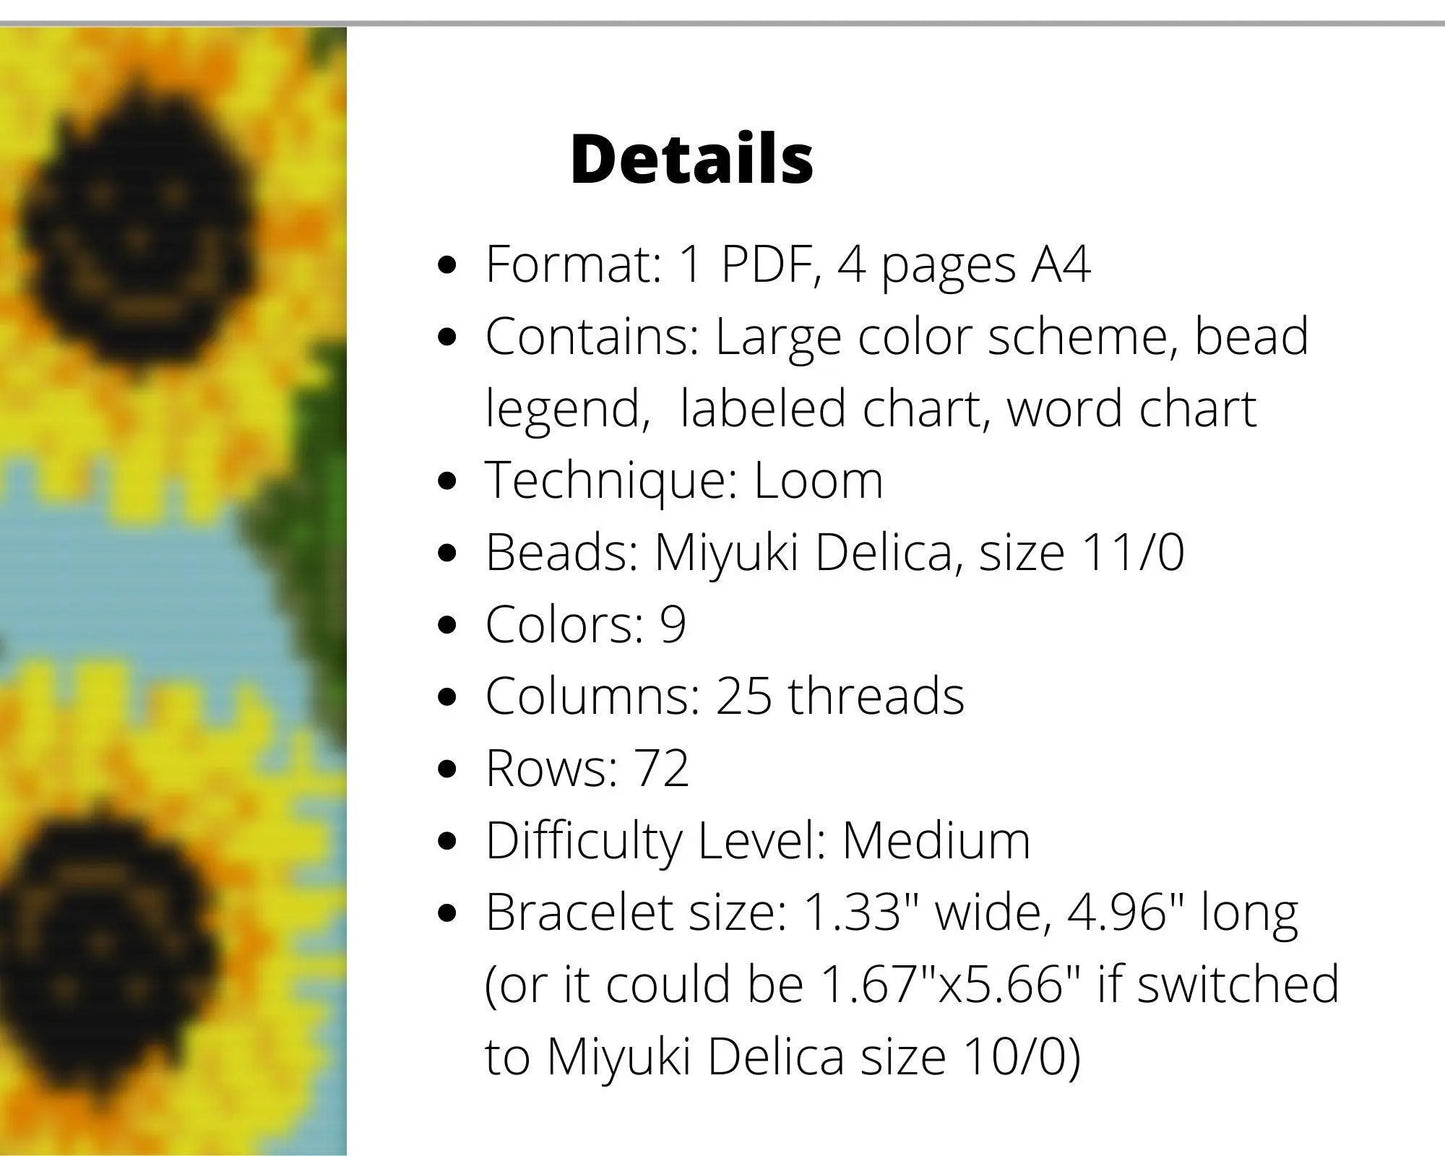 Sunflowers Loom pattern for beaded bracelet - NikoBeadsUA